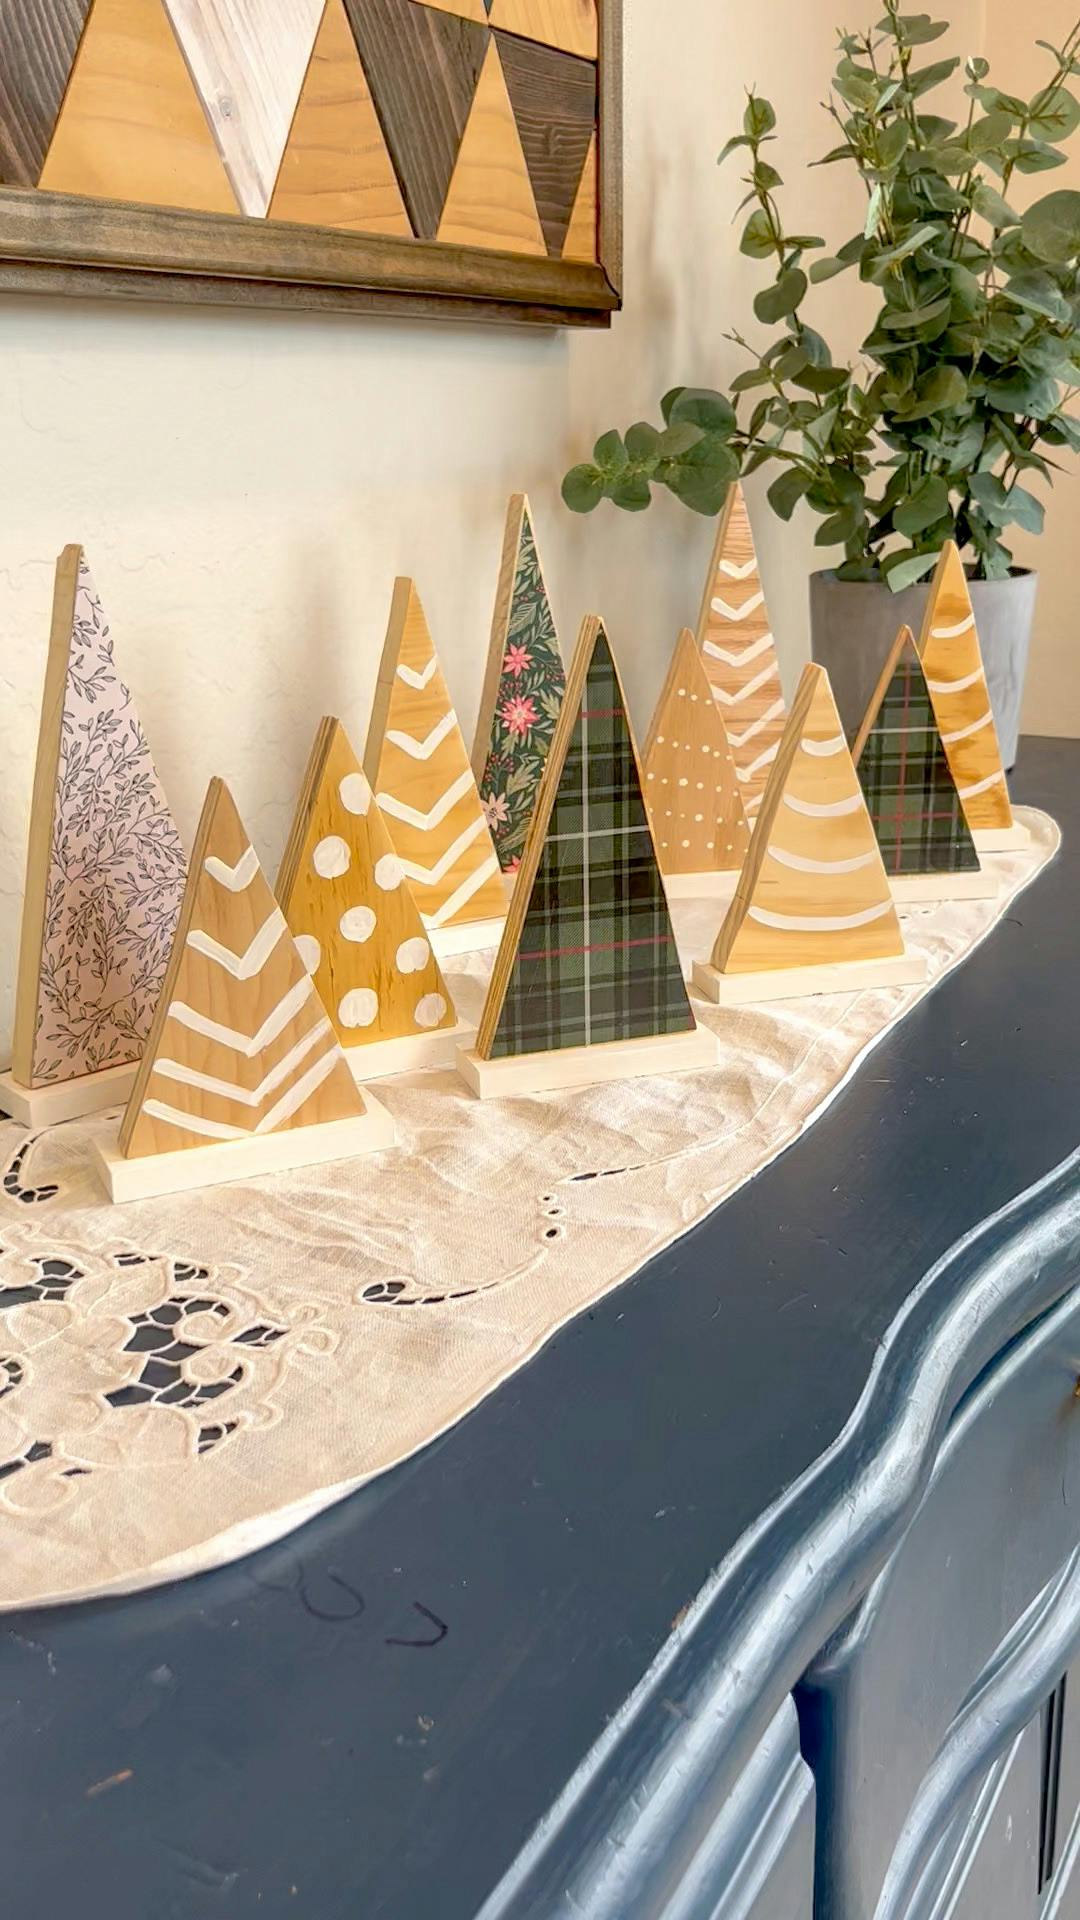 Handmade reversible wood Christmas trees